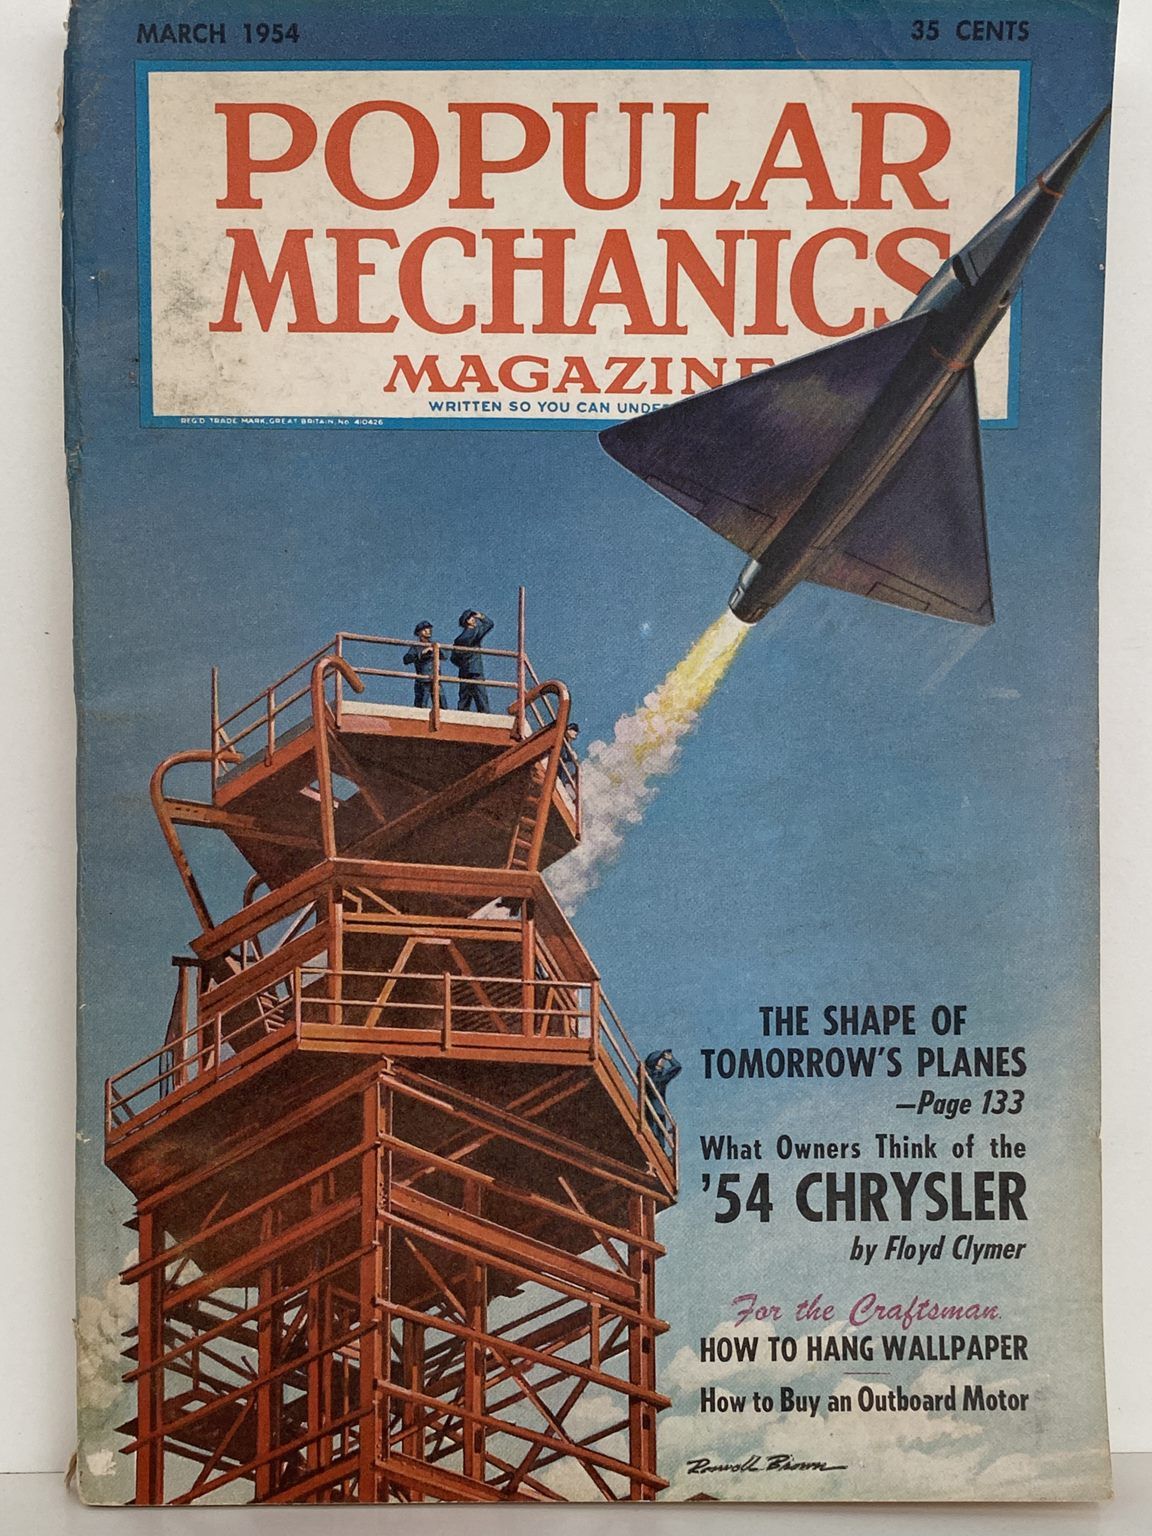 VINTAGE MAGAZINE: Popular Mechanics - Vol. 101, No. 3 - March 1954